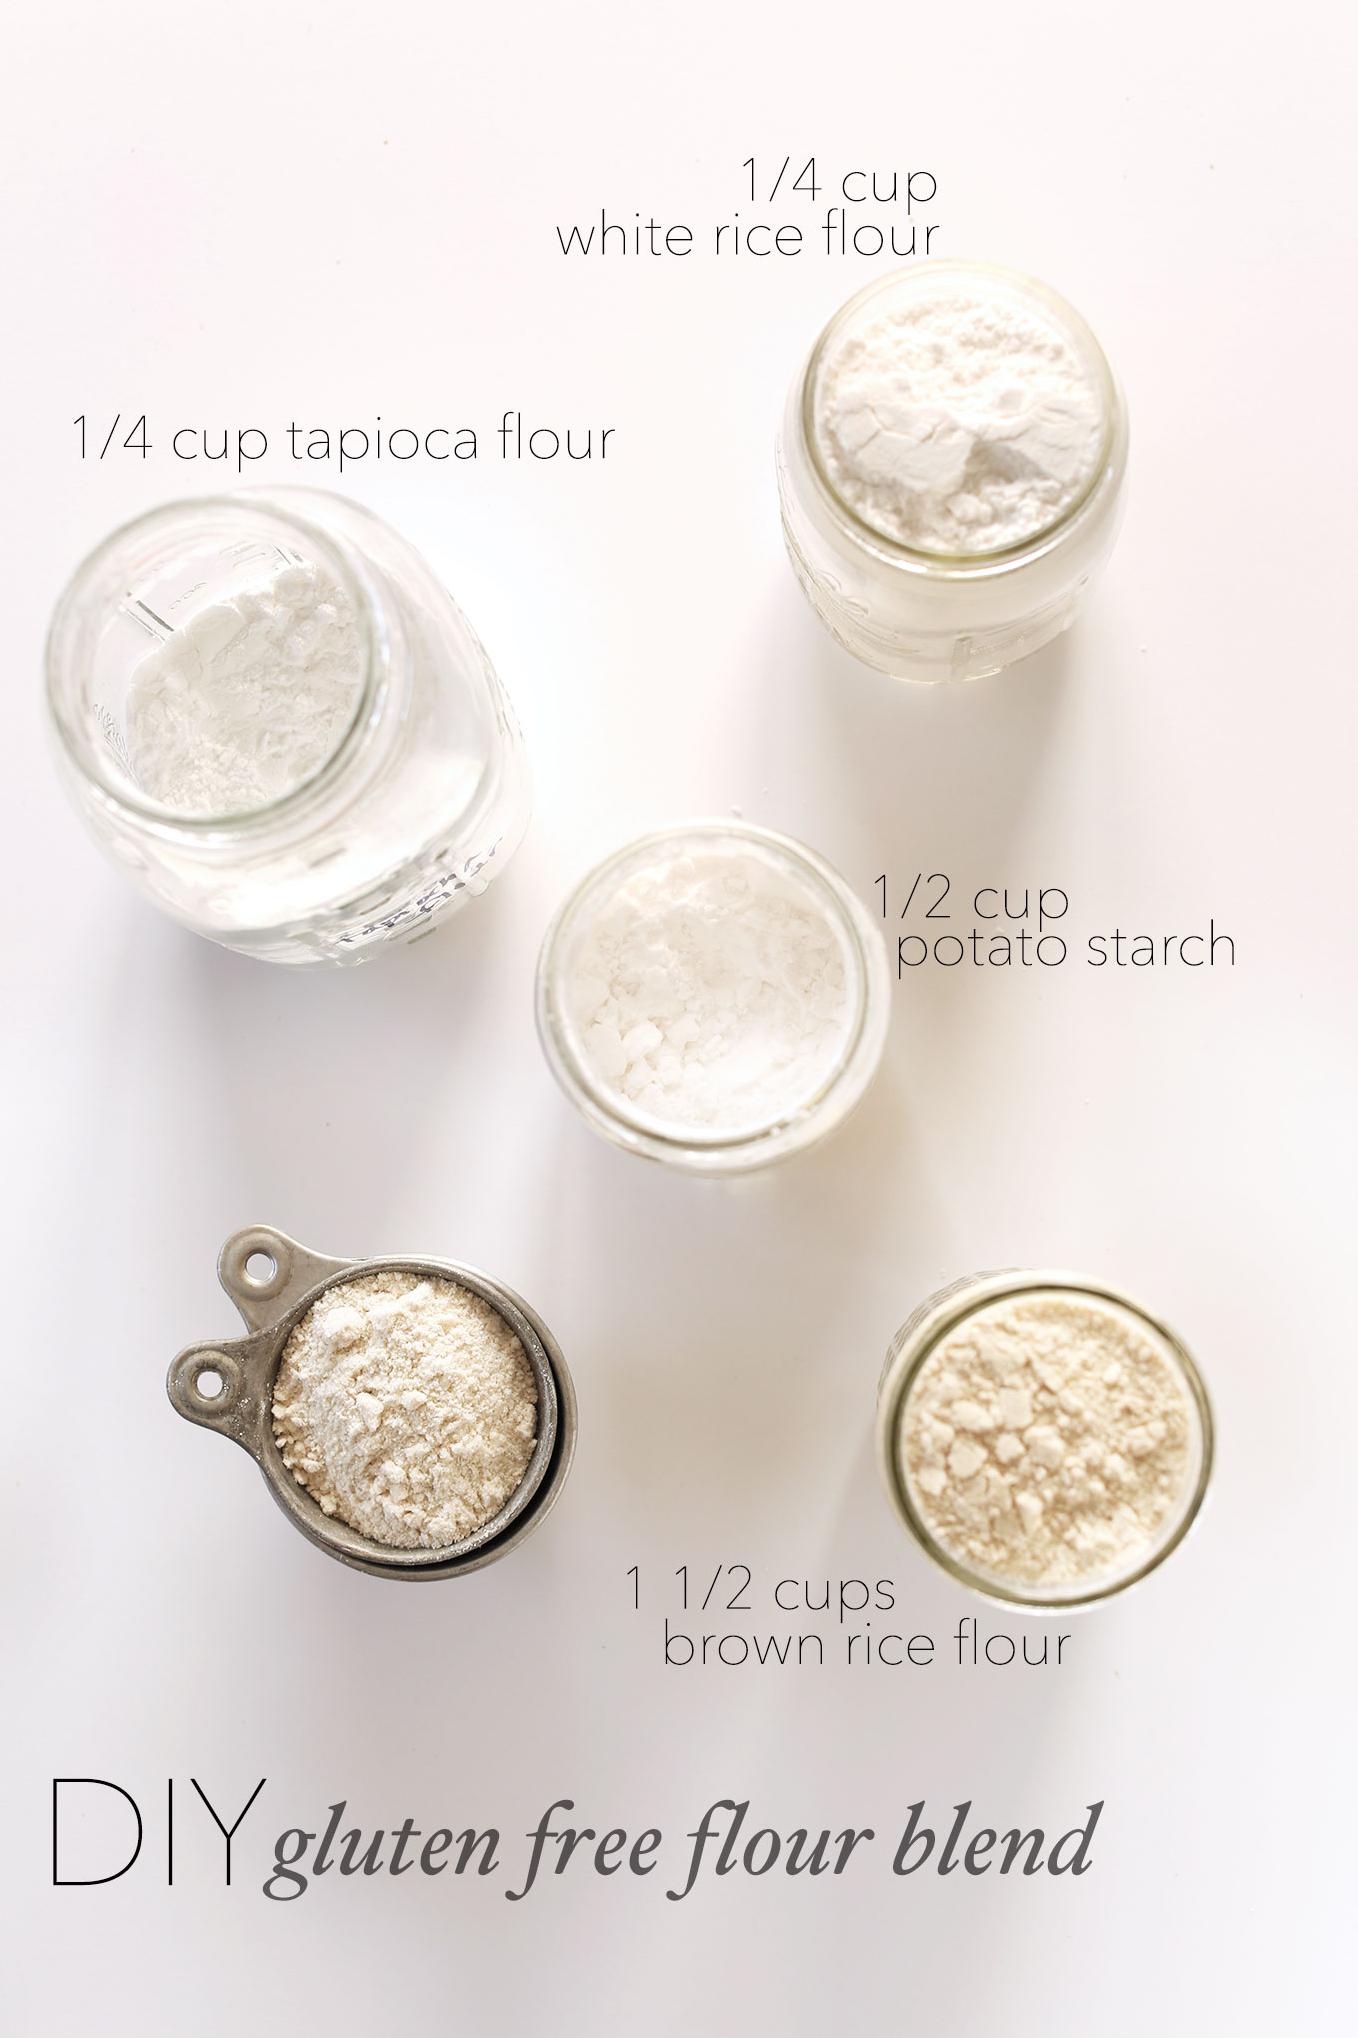  Delicious gluten-free baking flour for healthy treats!